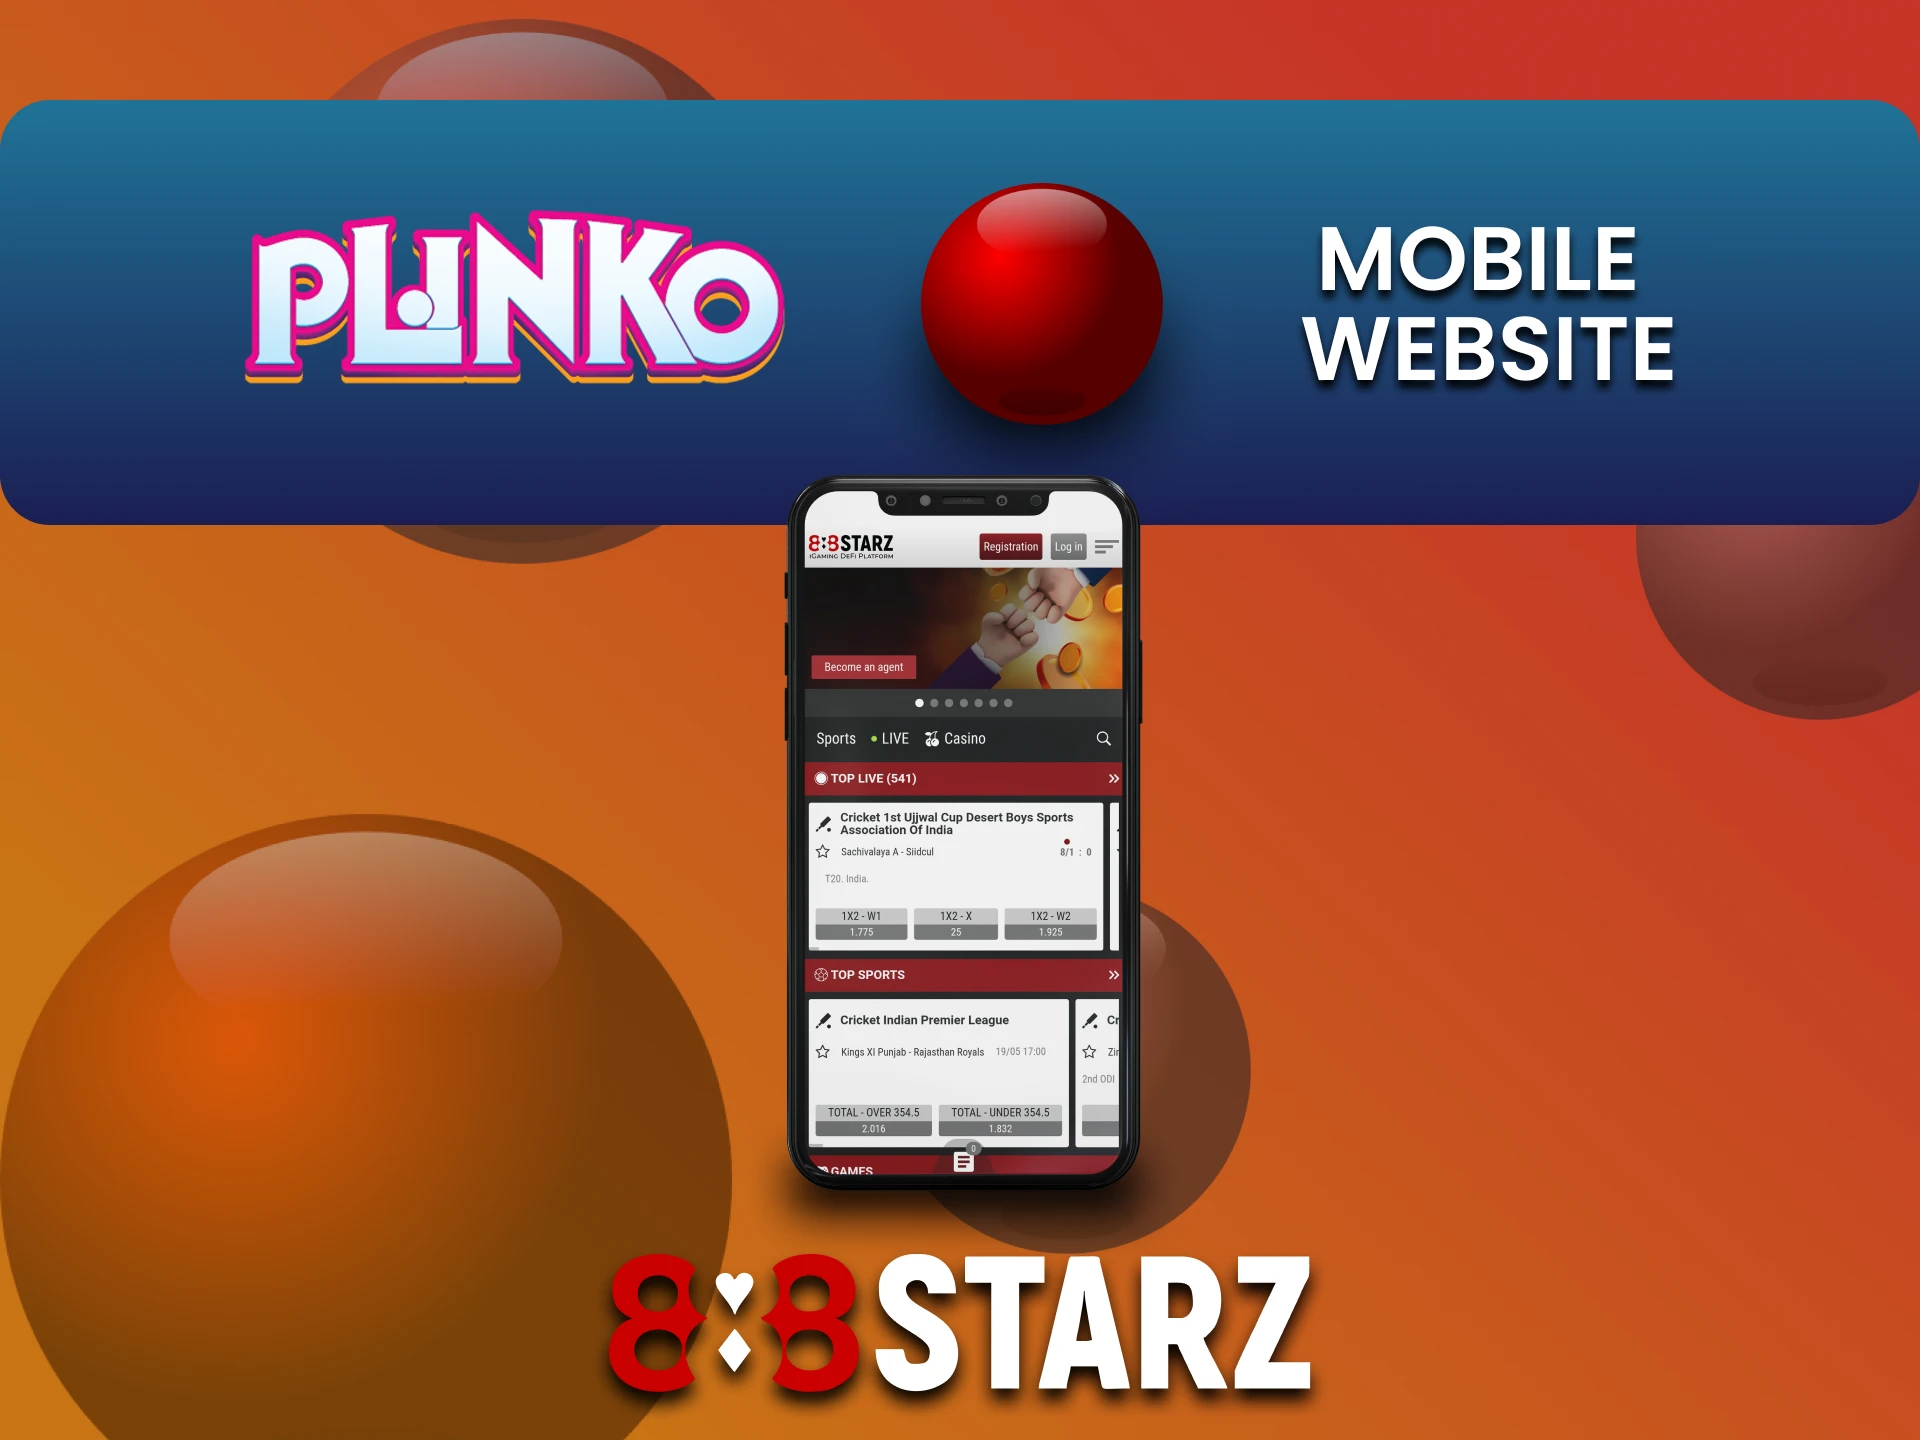 Use your mobile phone to play Plinko on 888starz.